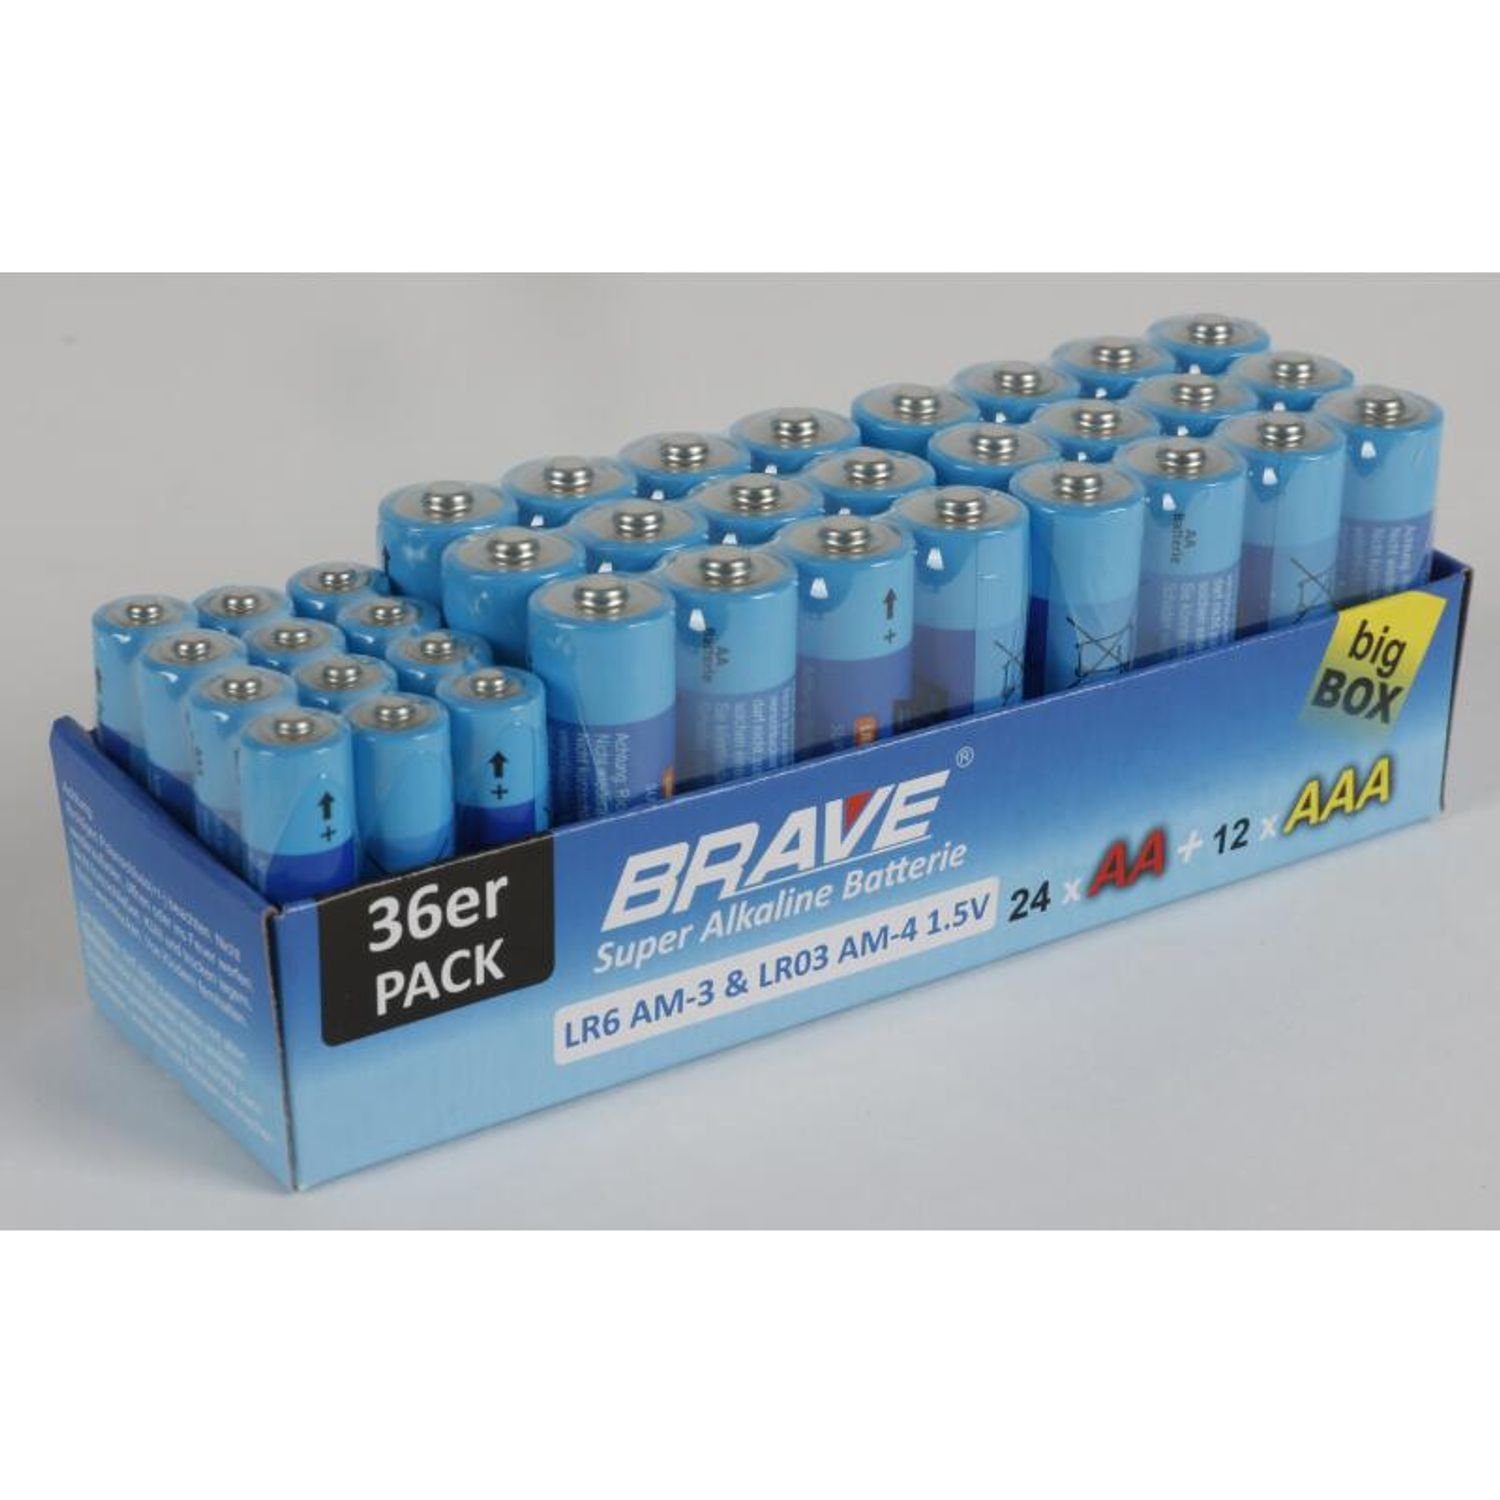 BURI 24x 36er-Packung Brave Alkaline Batterien AA & AAA Großpackung Batterie, (864 St) | Batterien